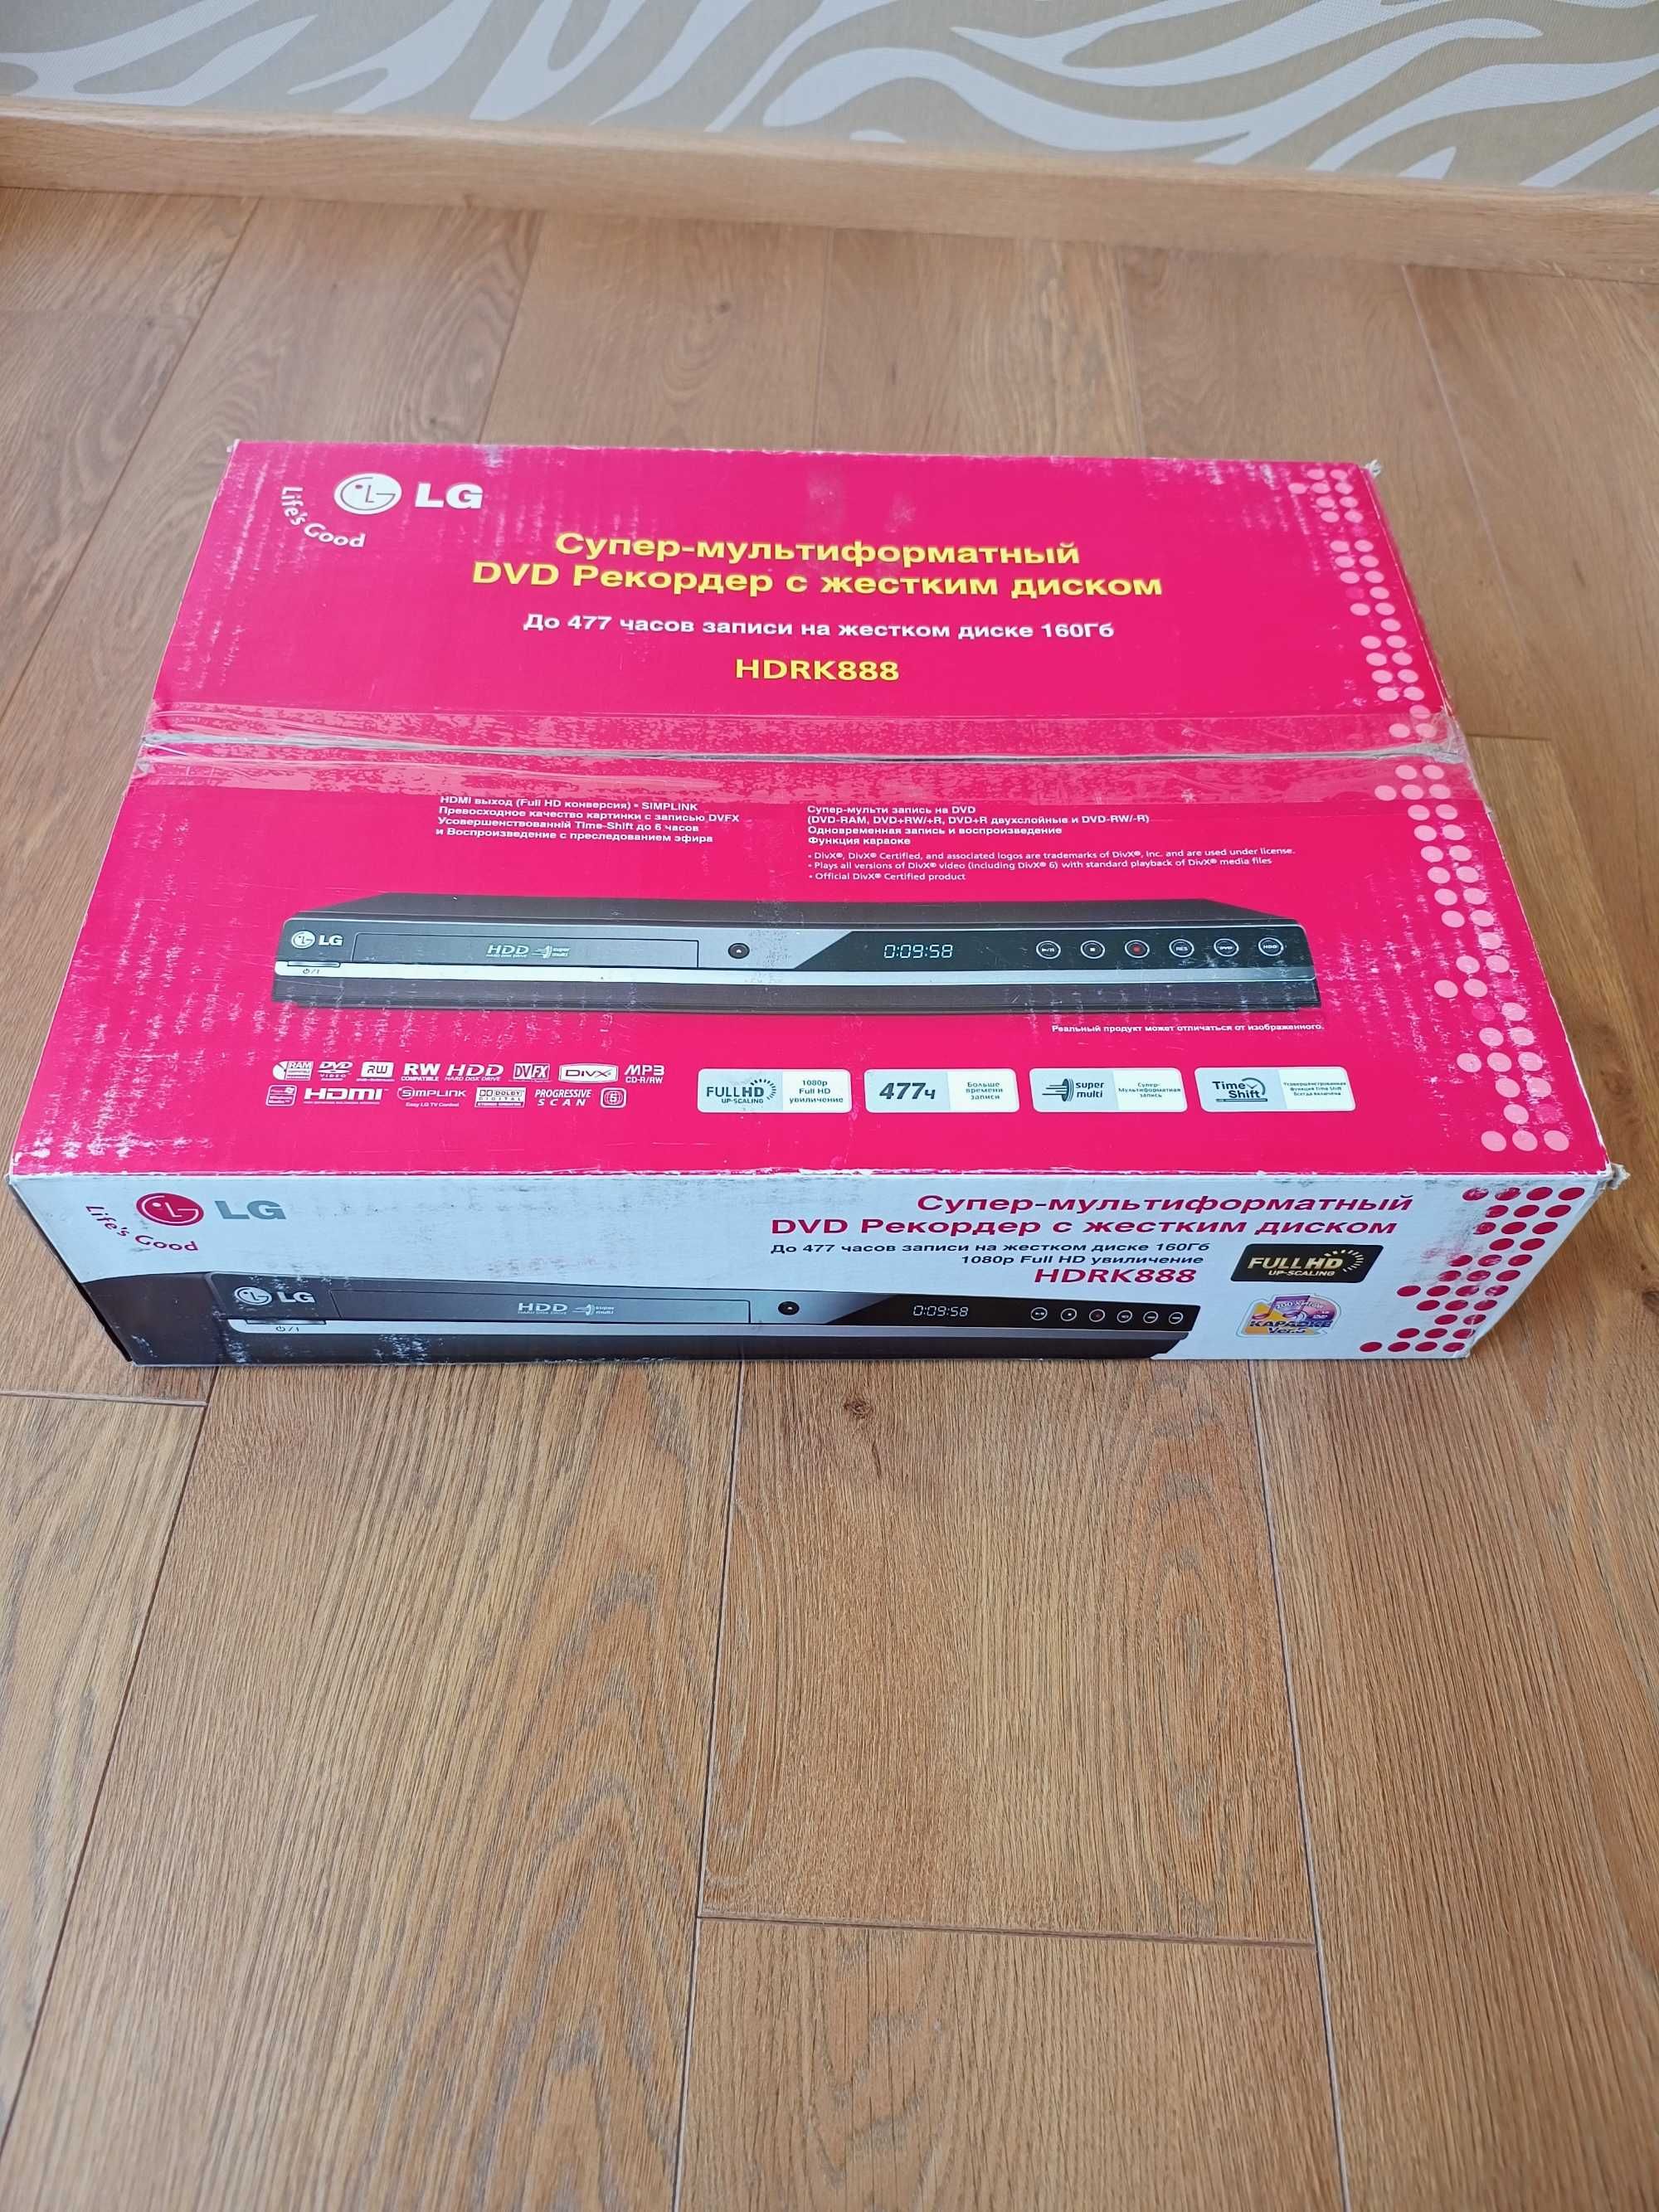 LG hdrk888 DVD-плейер с жестким диском